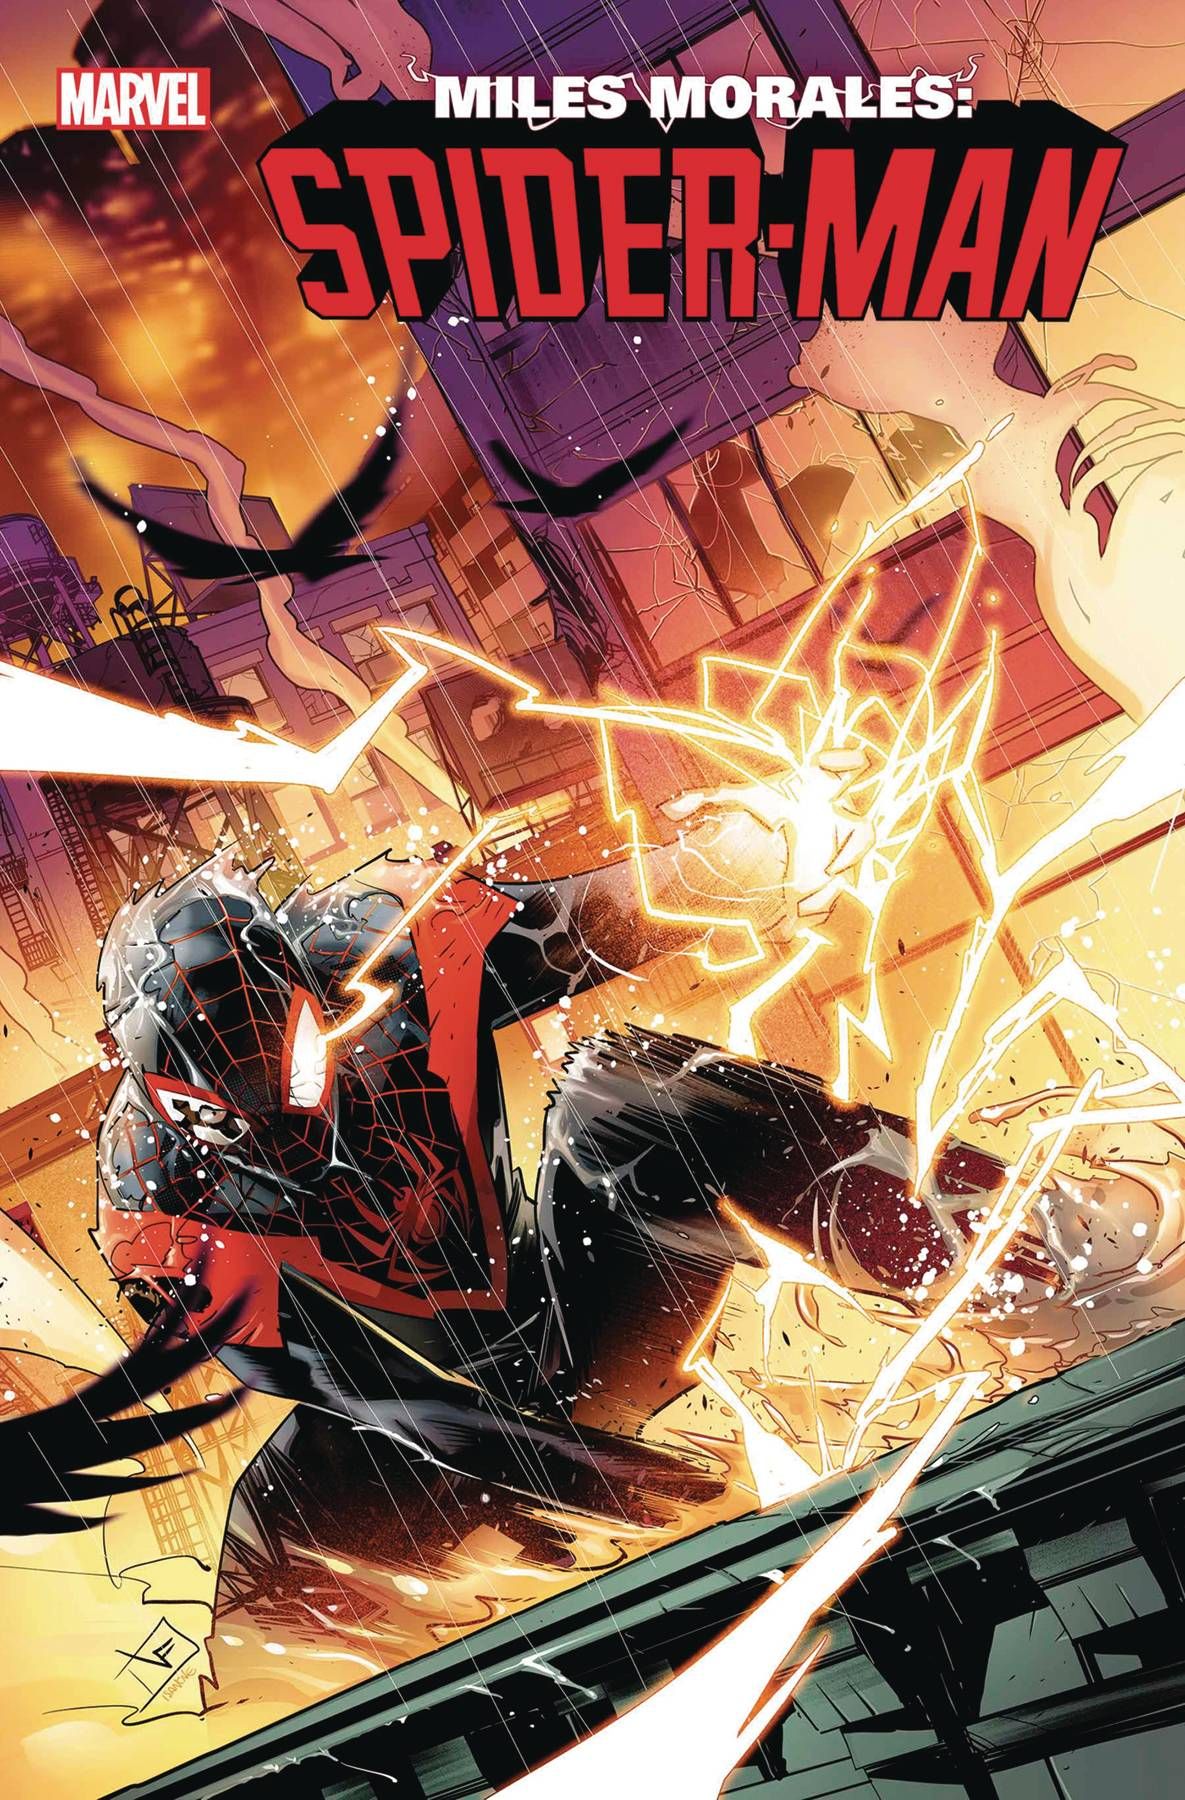 Miles Morales: Spider-Man #17 Comic